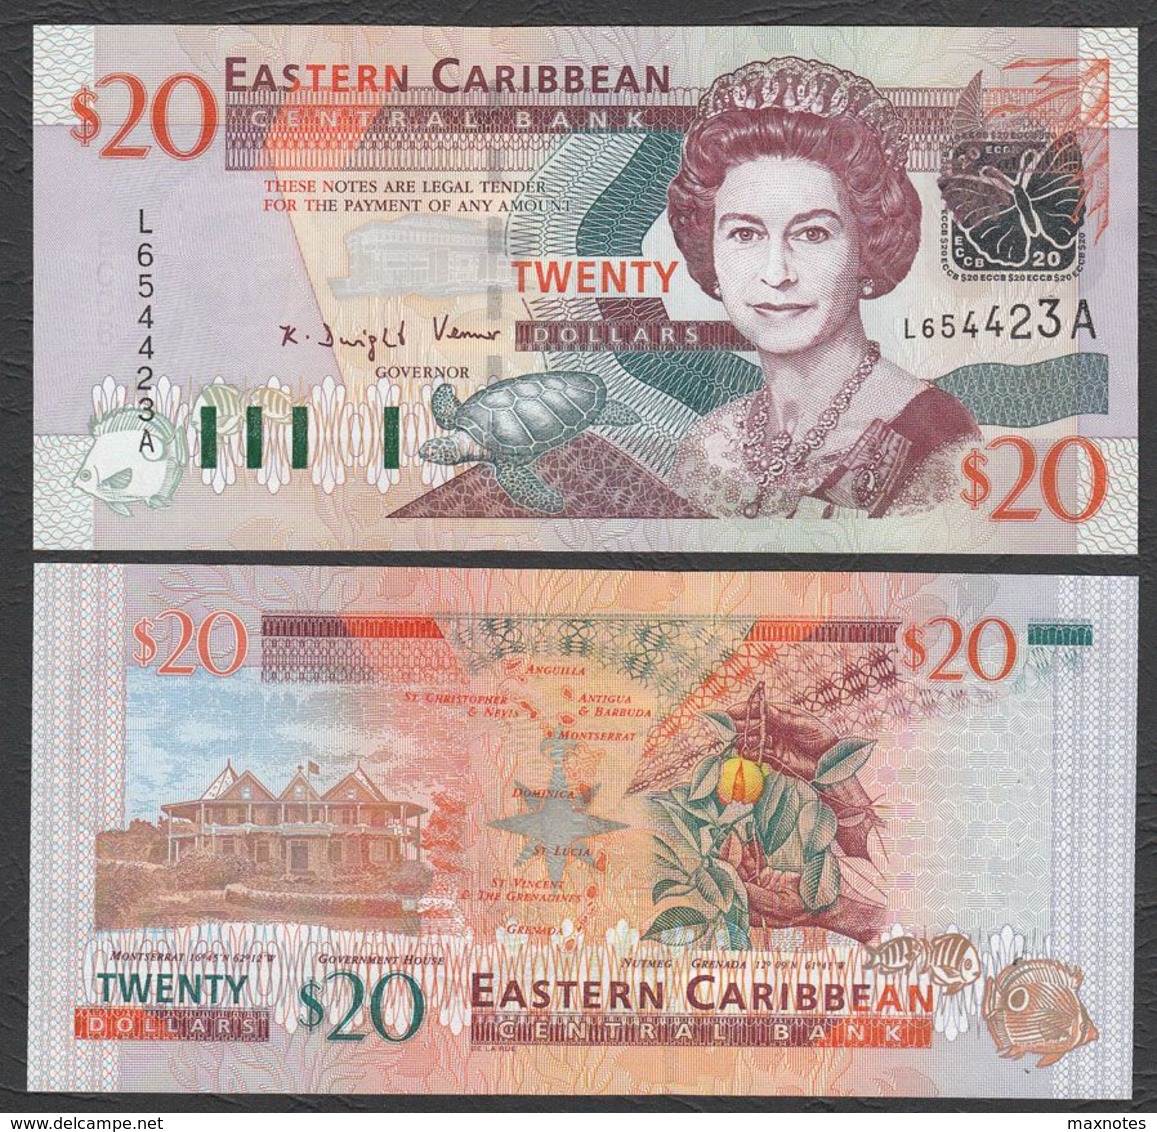 CARAIBI ORIENTALE (EASTERN CARIBBEAN) : 20 Dollars - P44a - ANTIGUA - Queen Elisabeth II - 2003 - UNC - Caribes Orientales